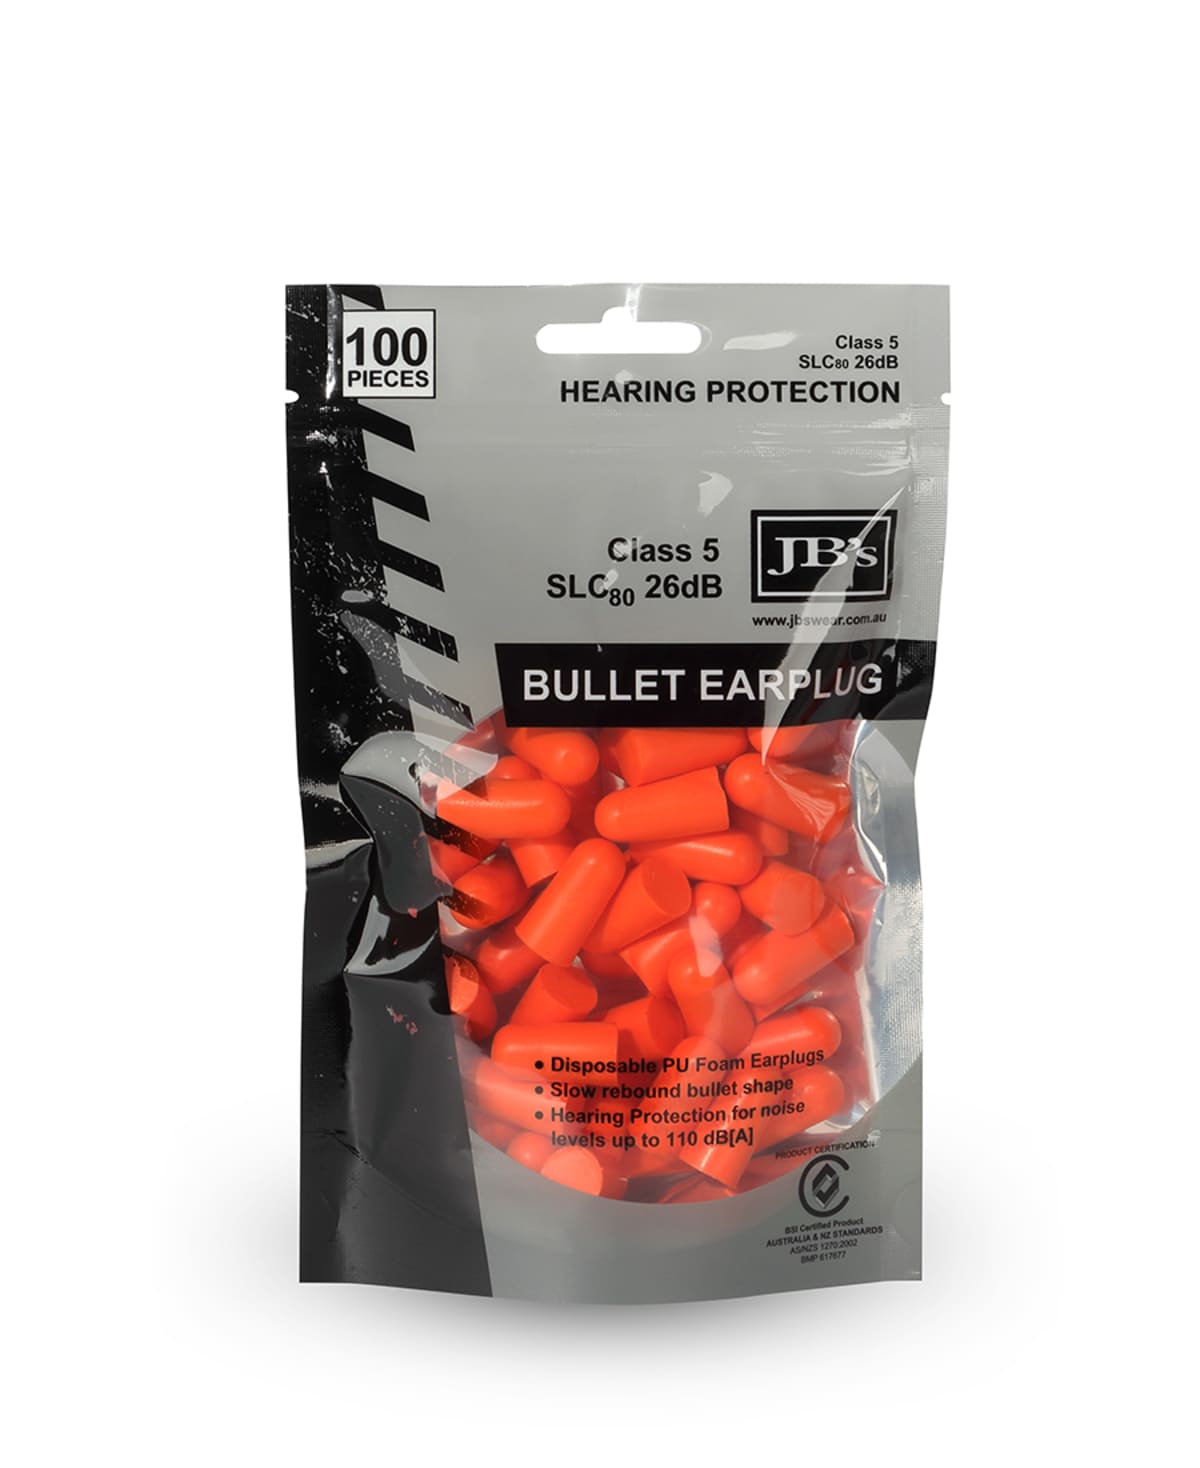 JB's Bullet Shaped Earplug (100 pieces)